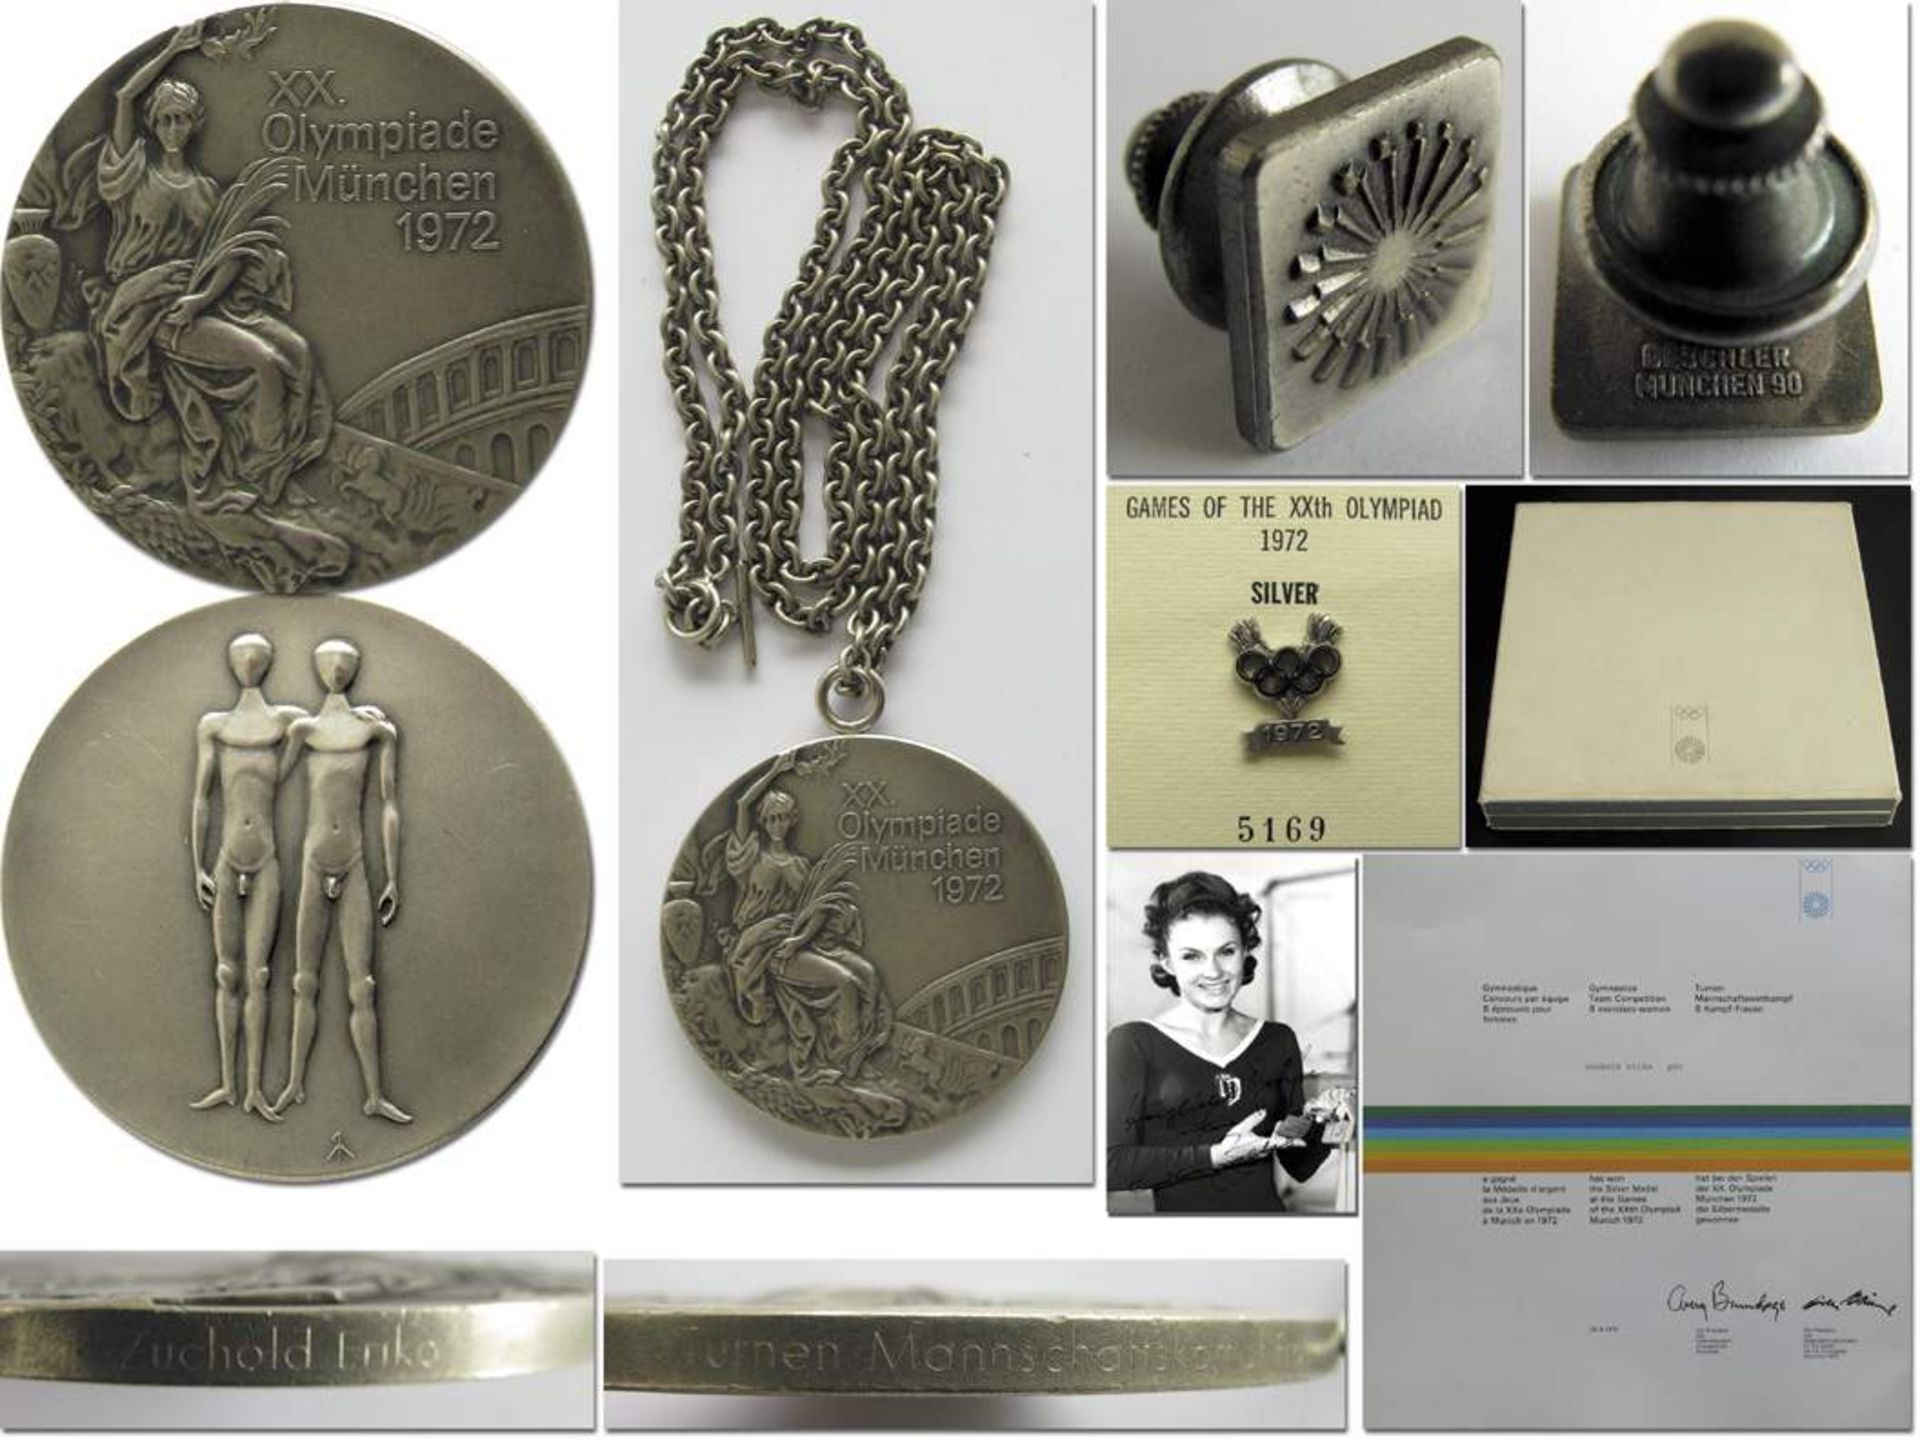 Winner's Medal: Olympic Games 1972  Munich - Silver medal of the Olympic Games in Munich 1972 for